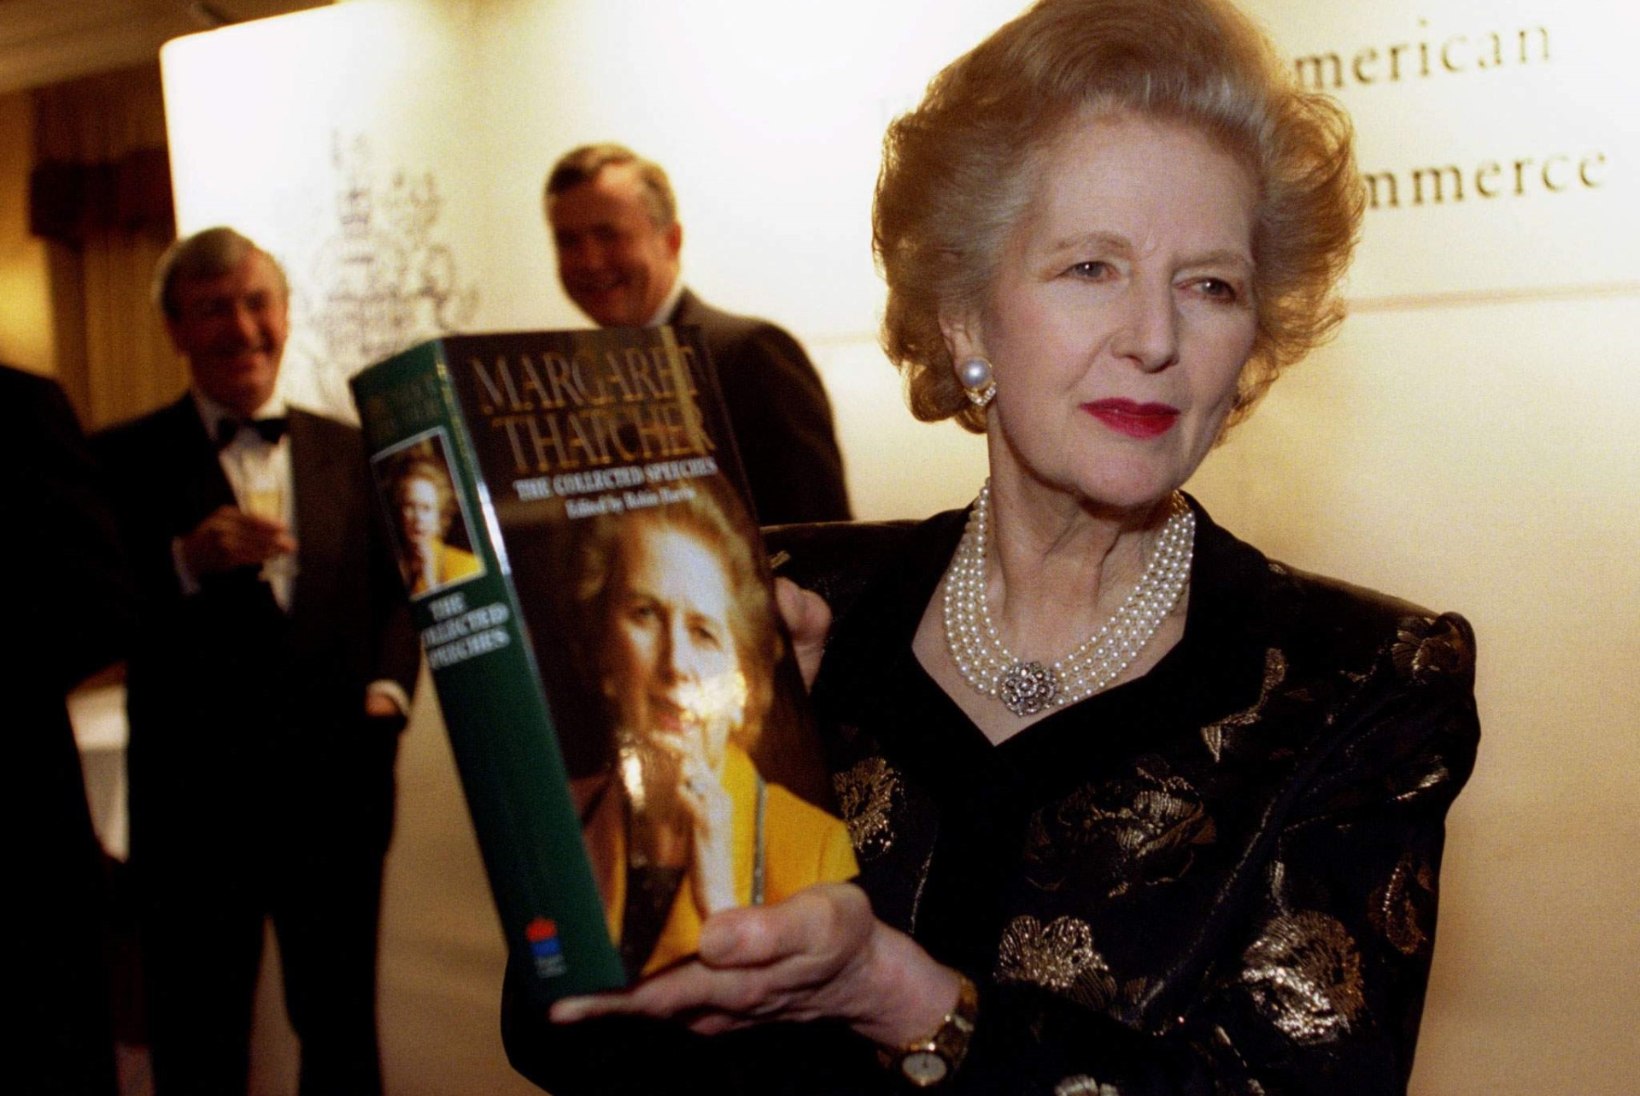 Margaret Thatcheri nooruslikkuse saladus: 0,3 amprit vannivette